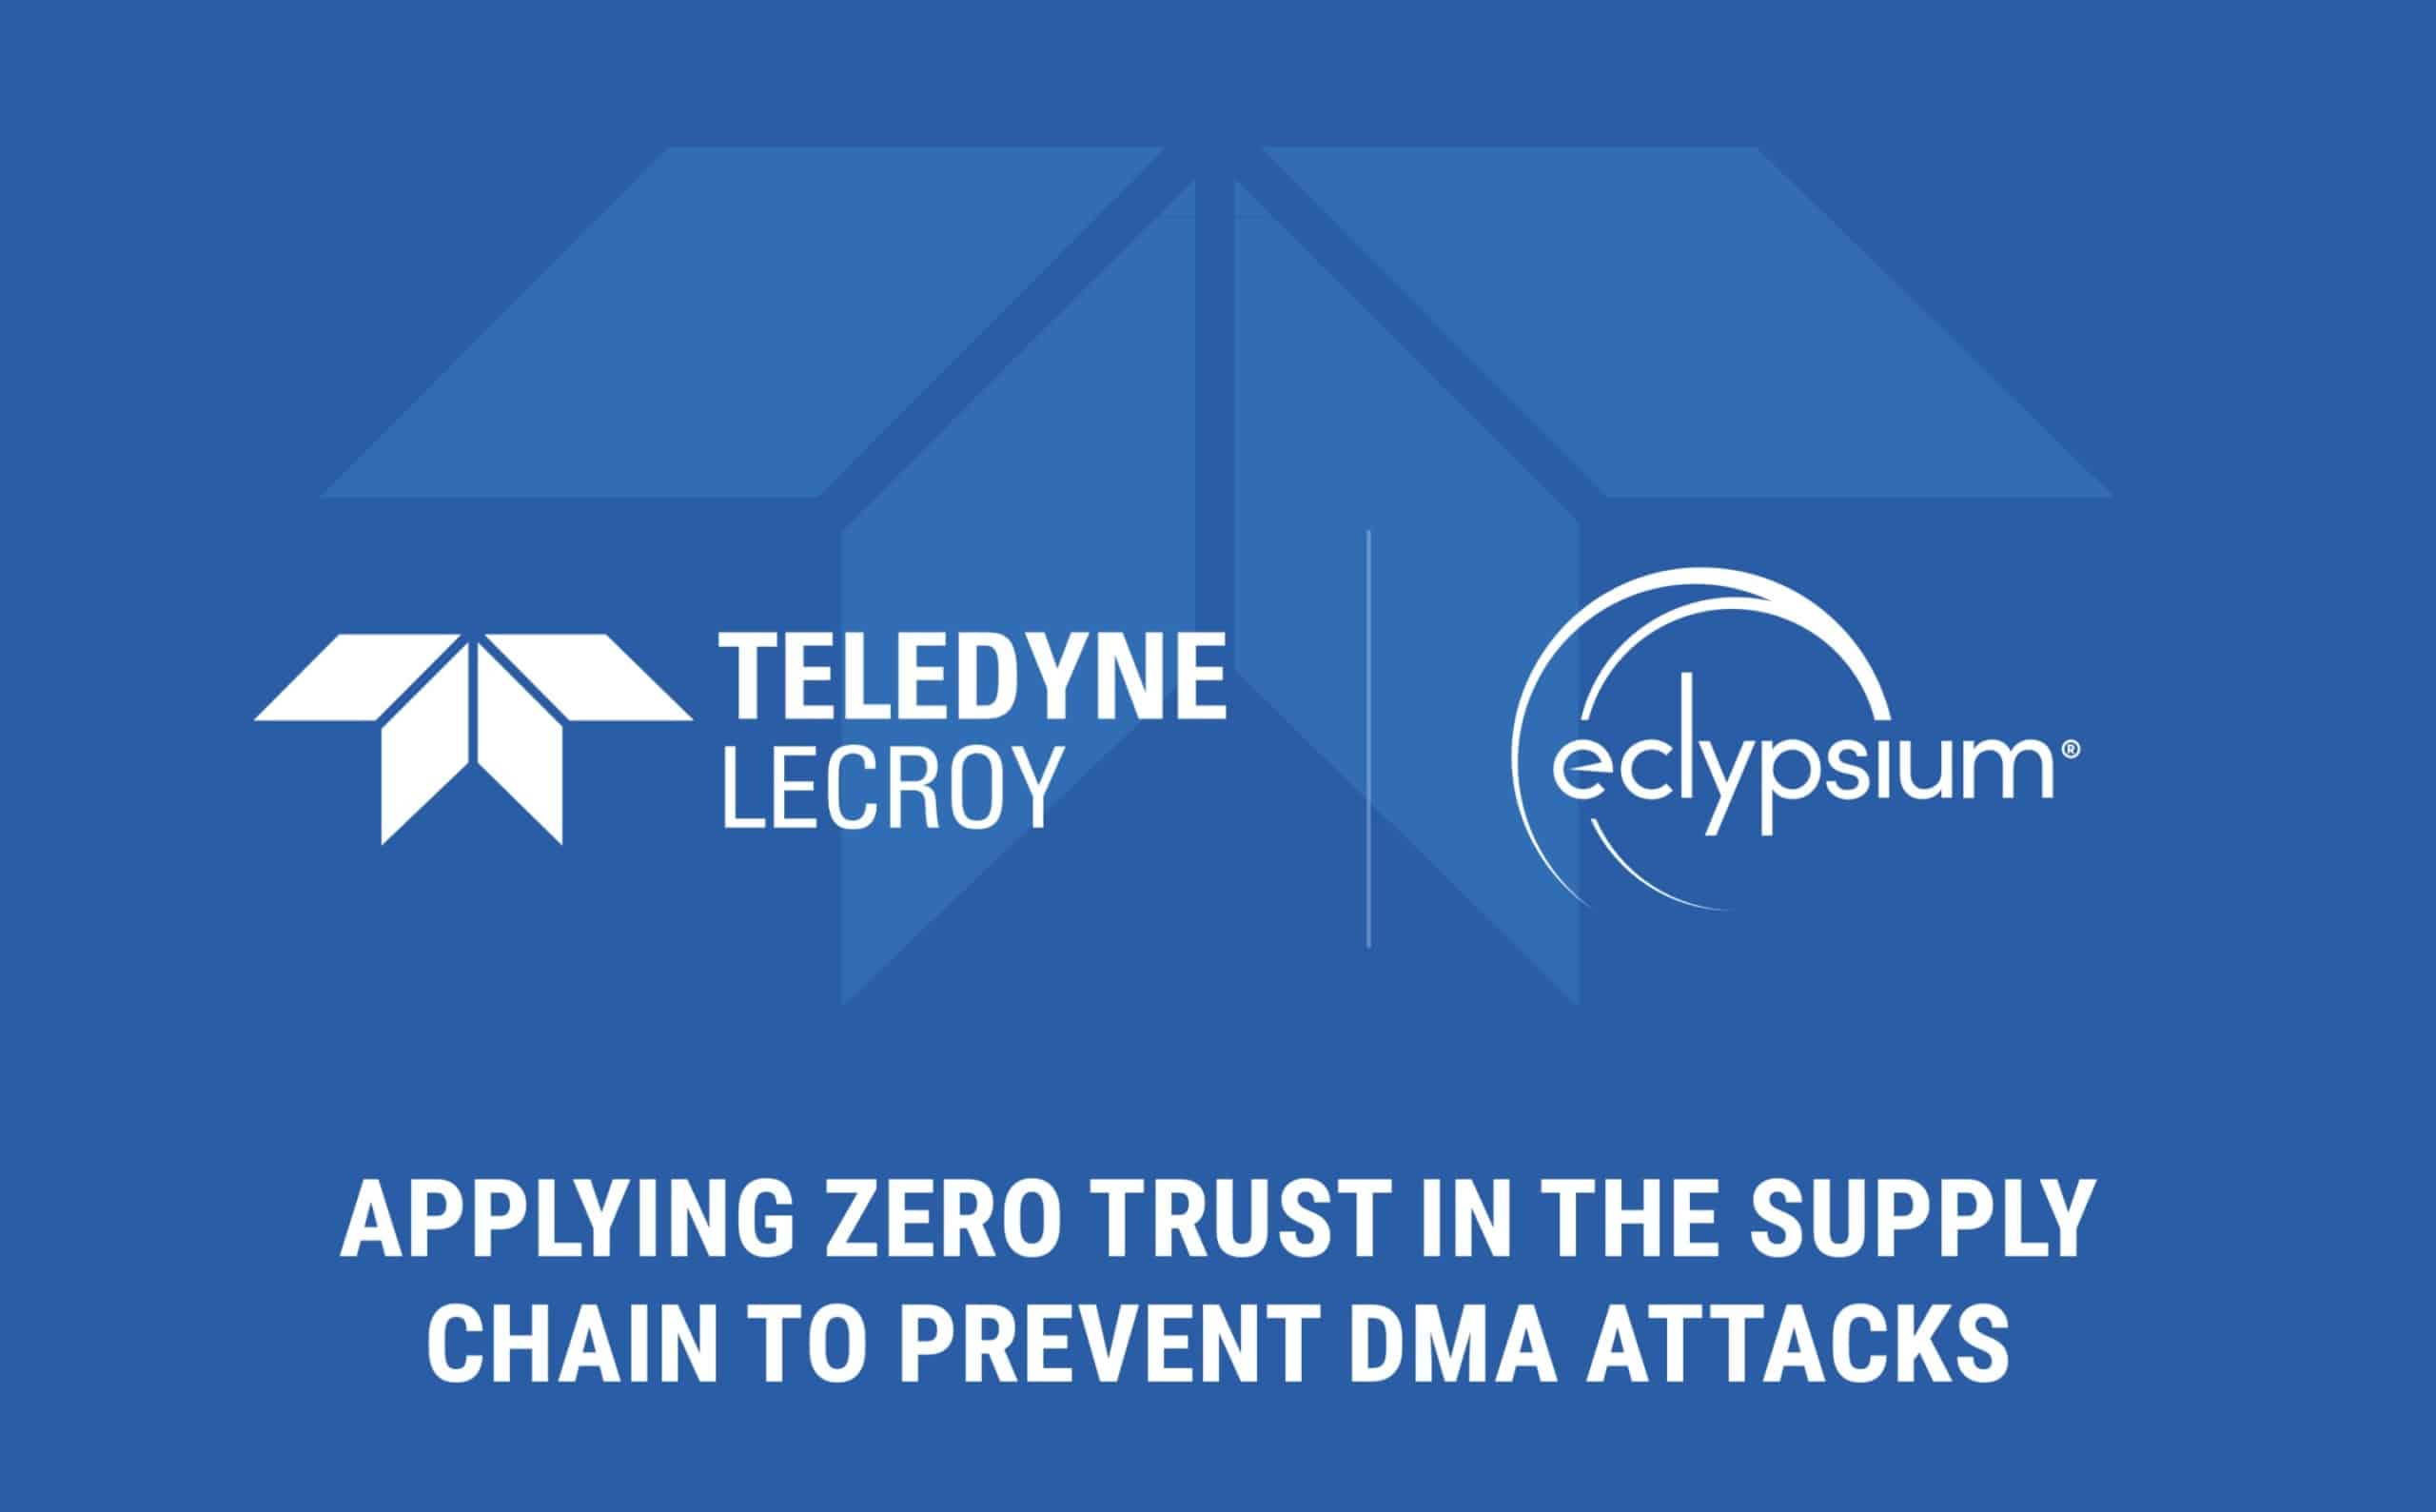 Teledyne Lecroy and Eclypsium logos